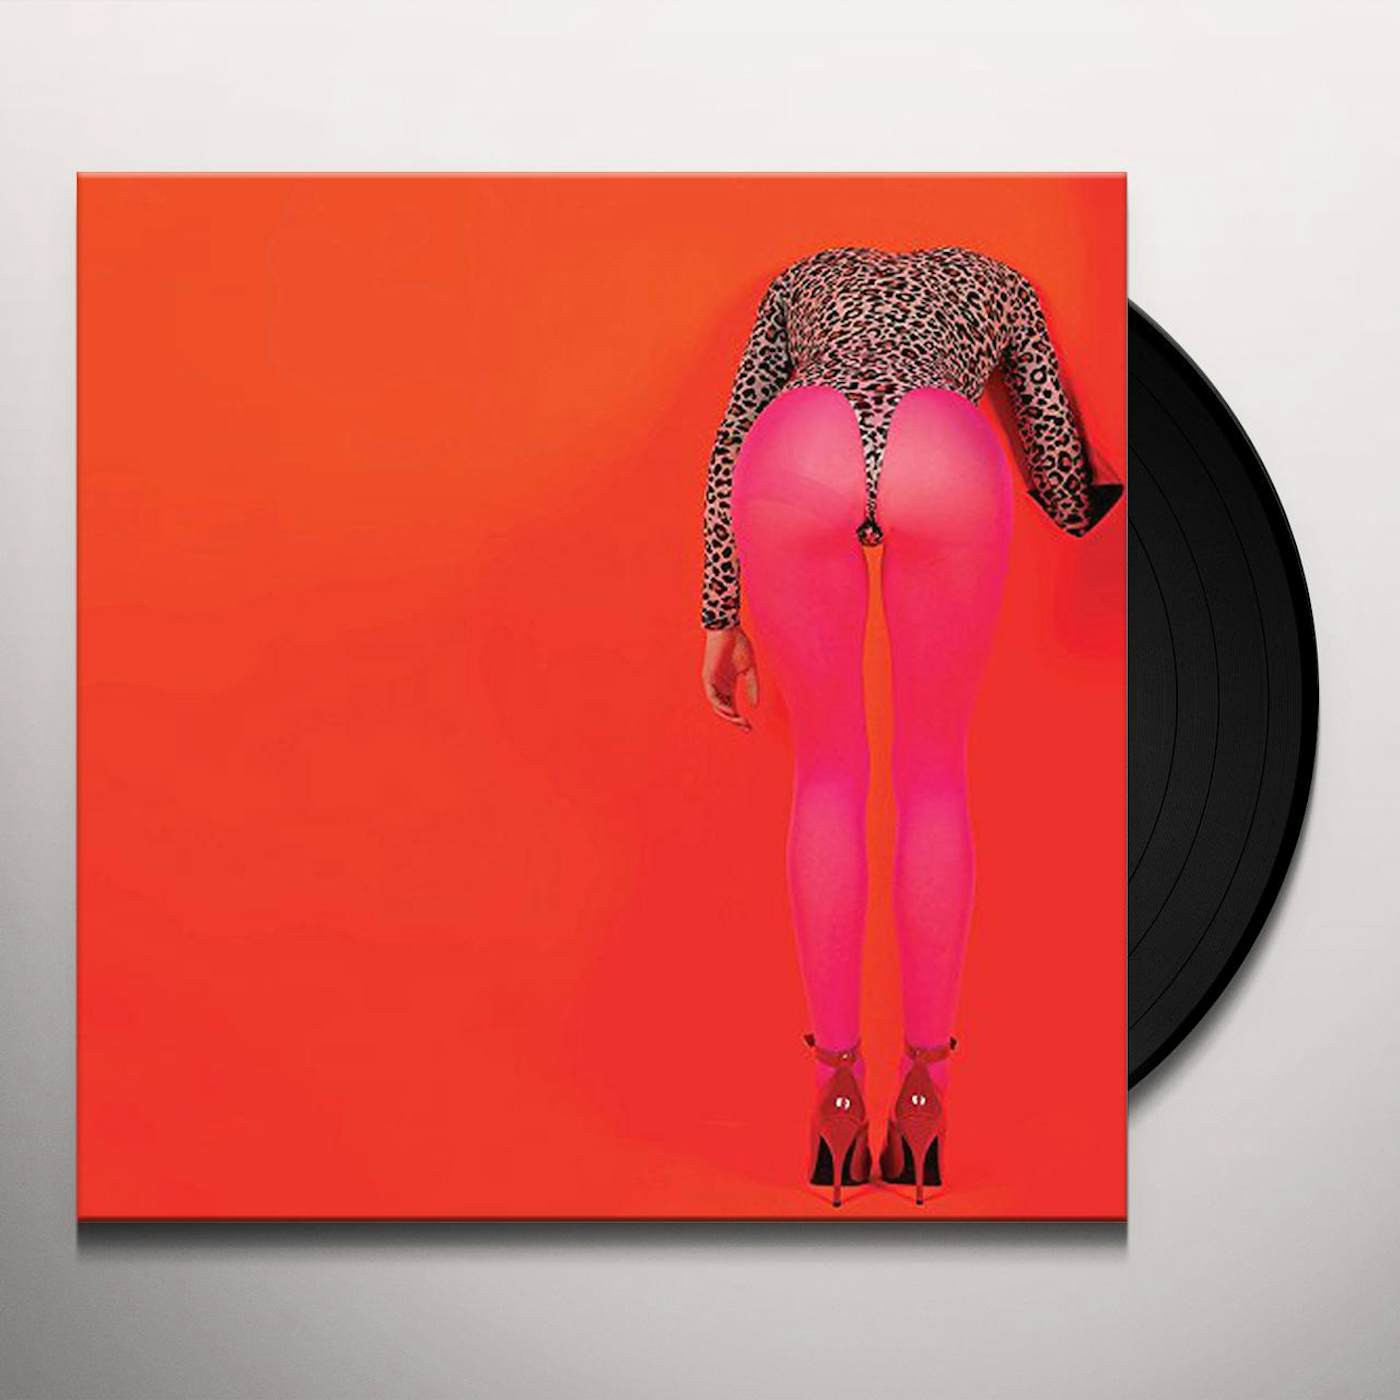 St. Vincent MASSEDUCTION Vinyl Record - Colored Vinyl, Deluxe Edition, Pink Vinyl